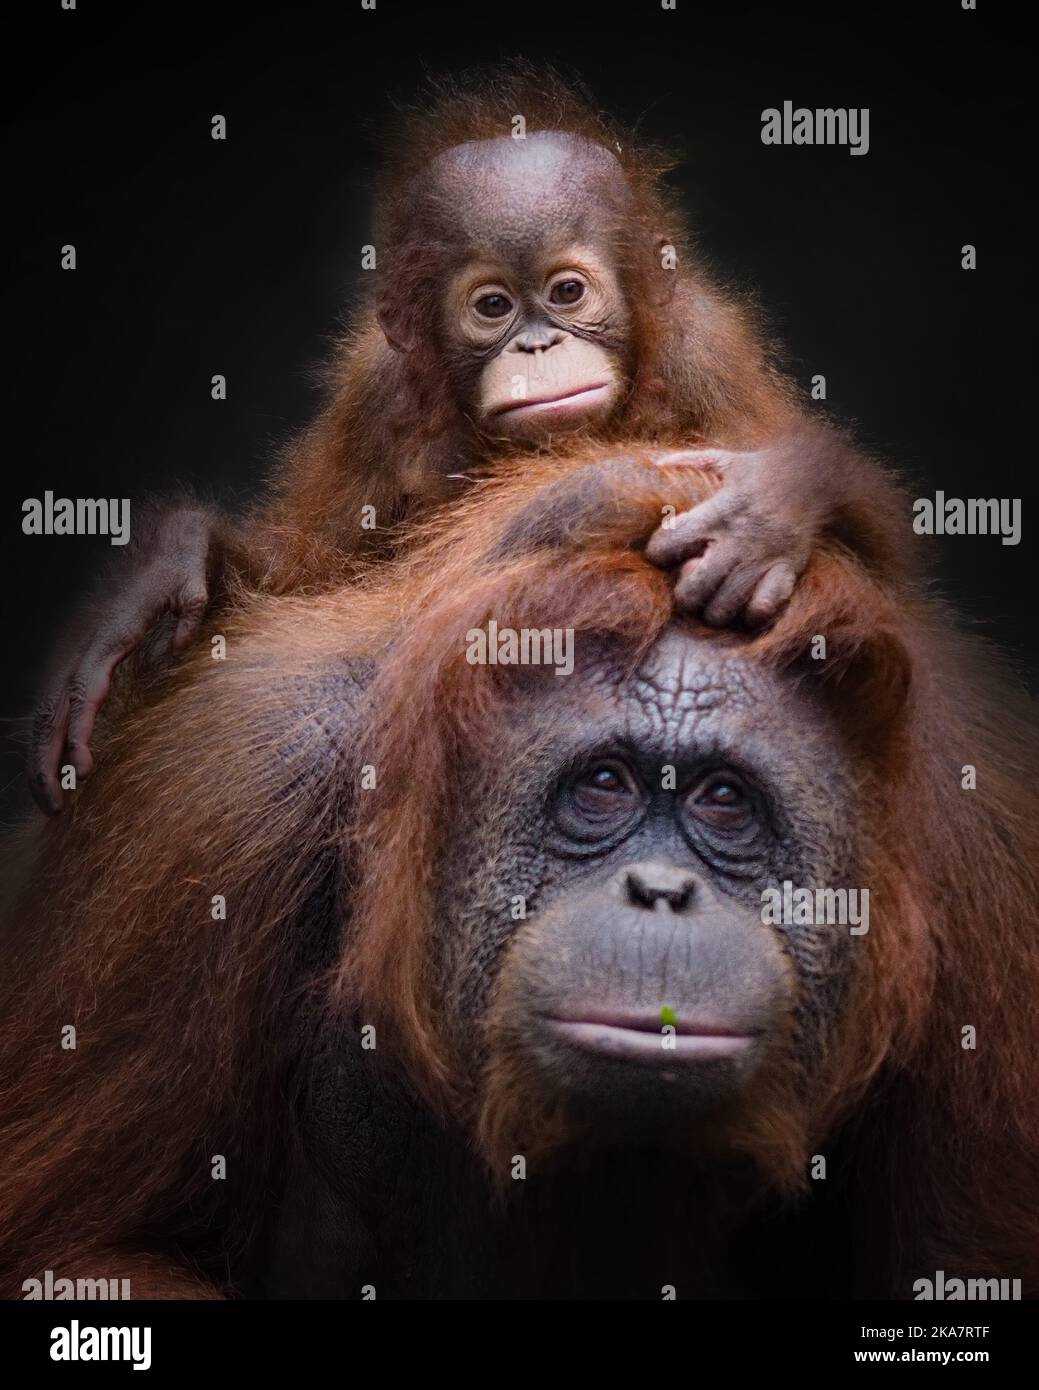 Difference Between Monkeys and Apes - Taman Safari Bali